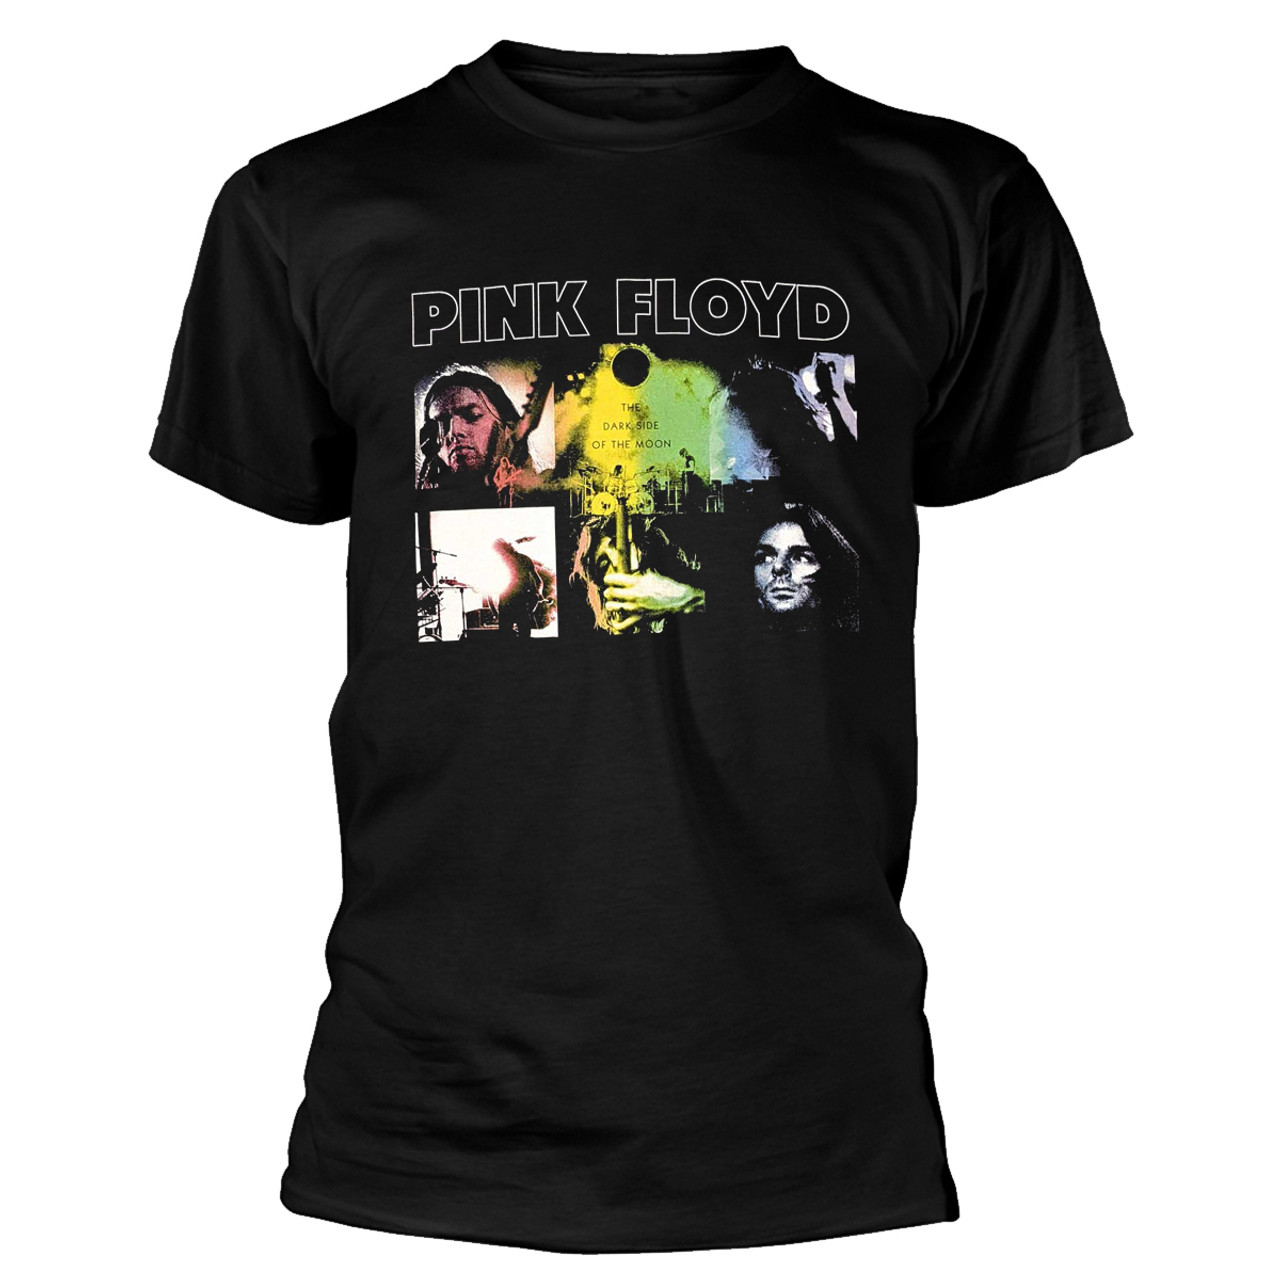 Pink Floyd 'Poster' (Black) T-Shirt